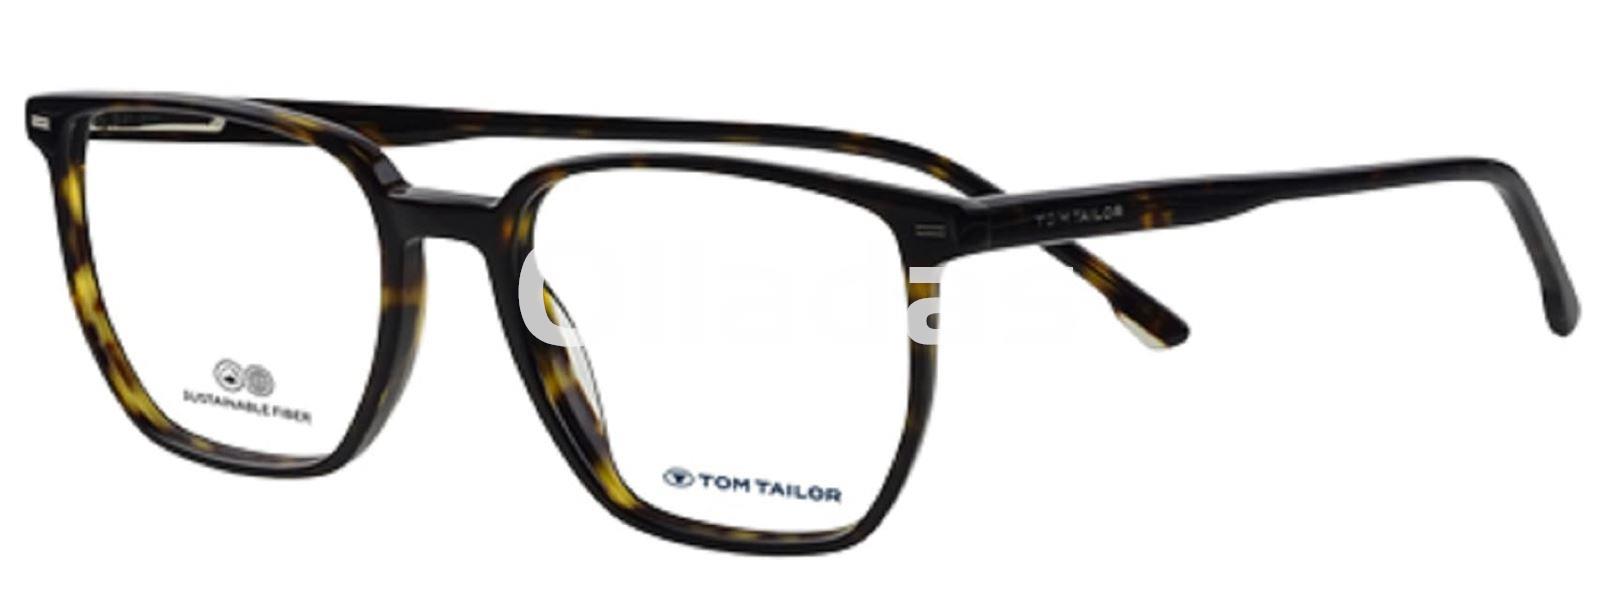 Tom Tailor 60613. - Imagen 1